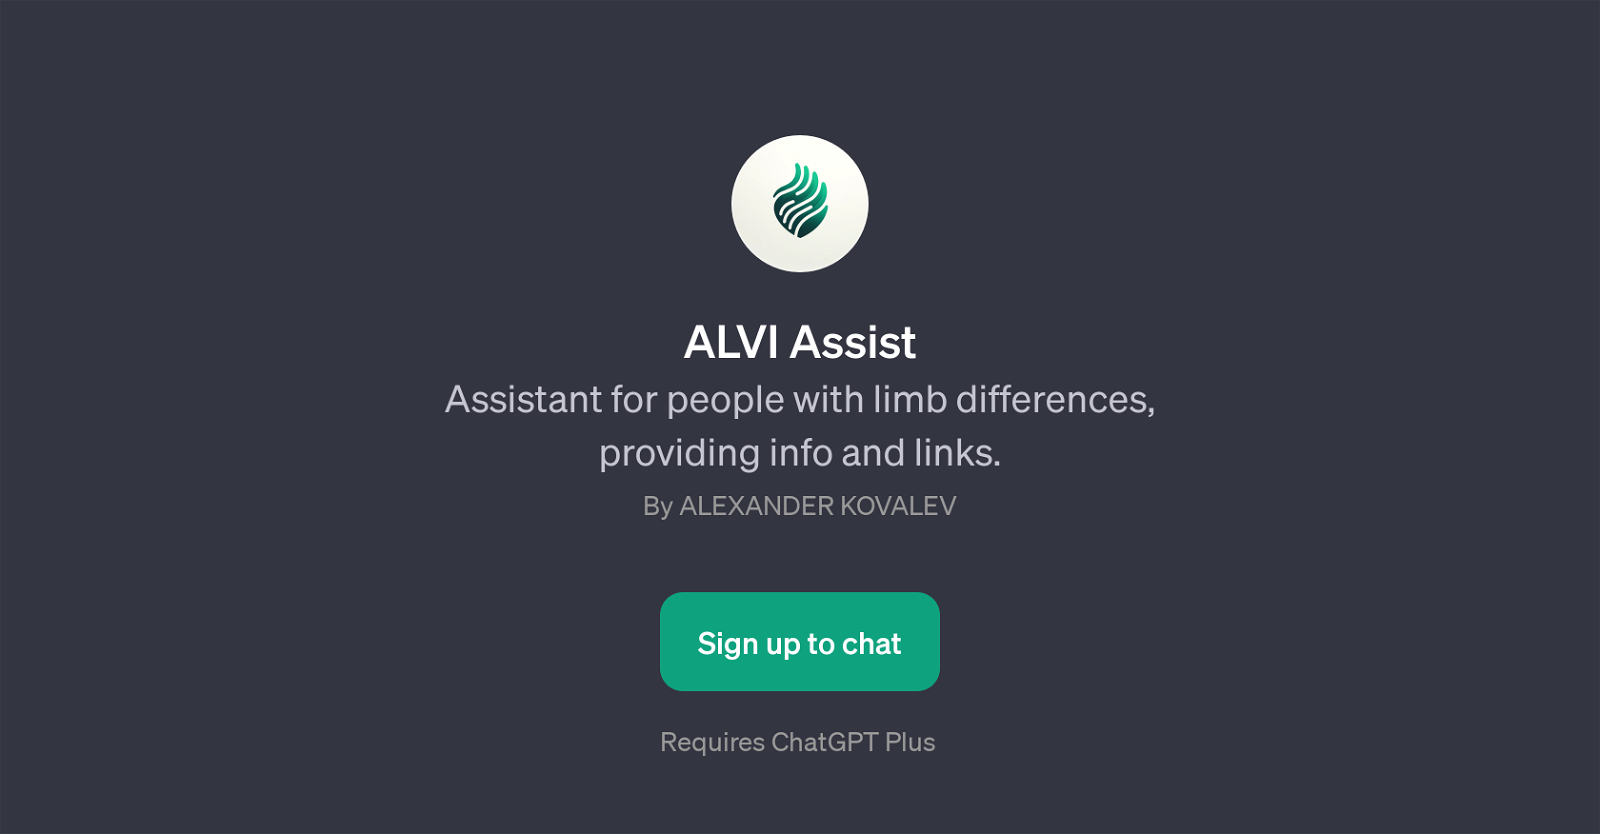 ALVI Assist website